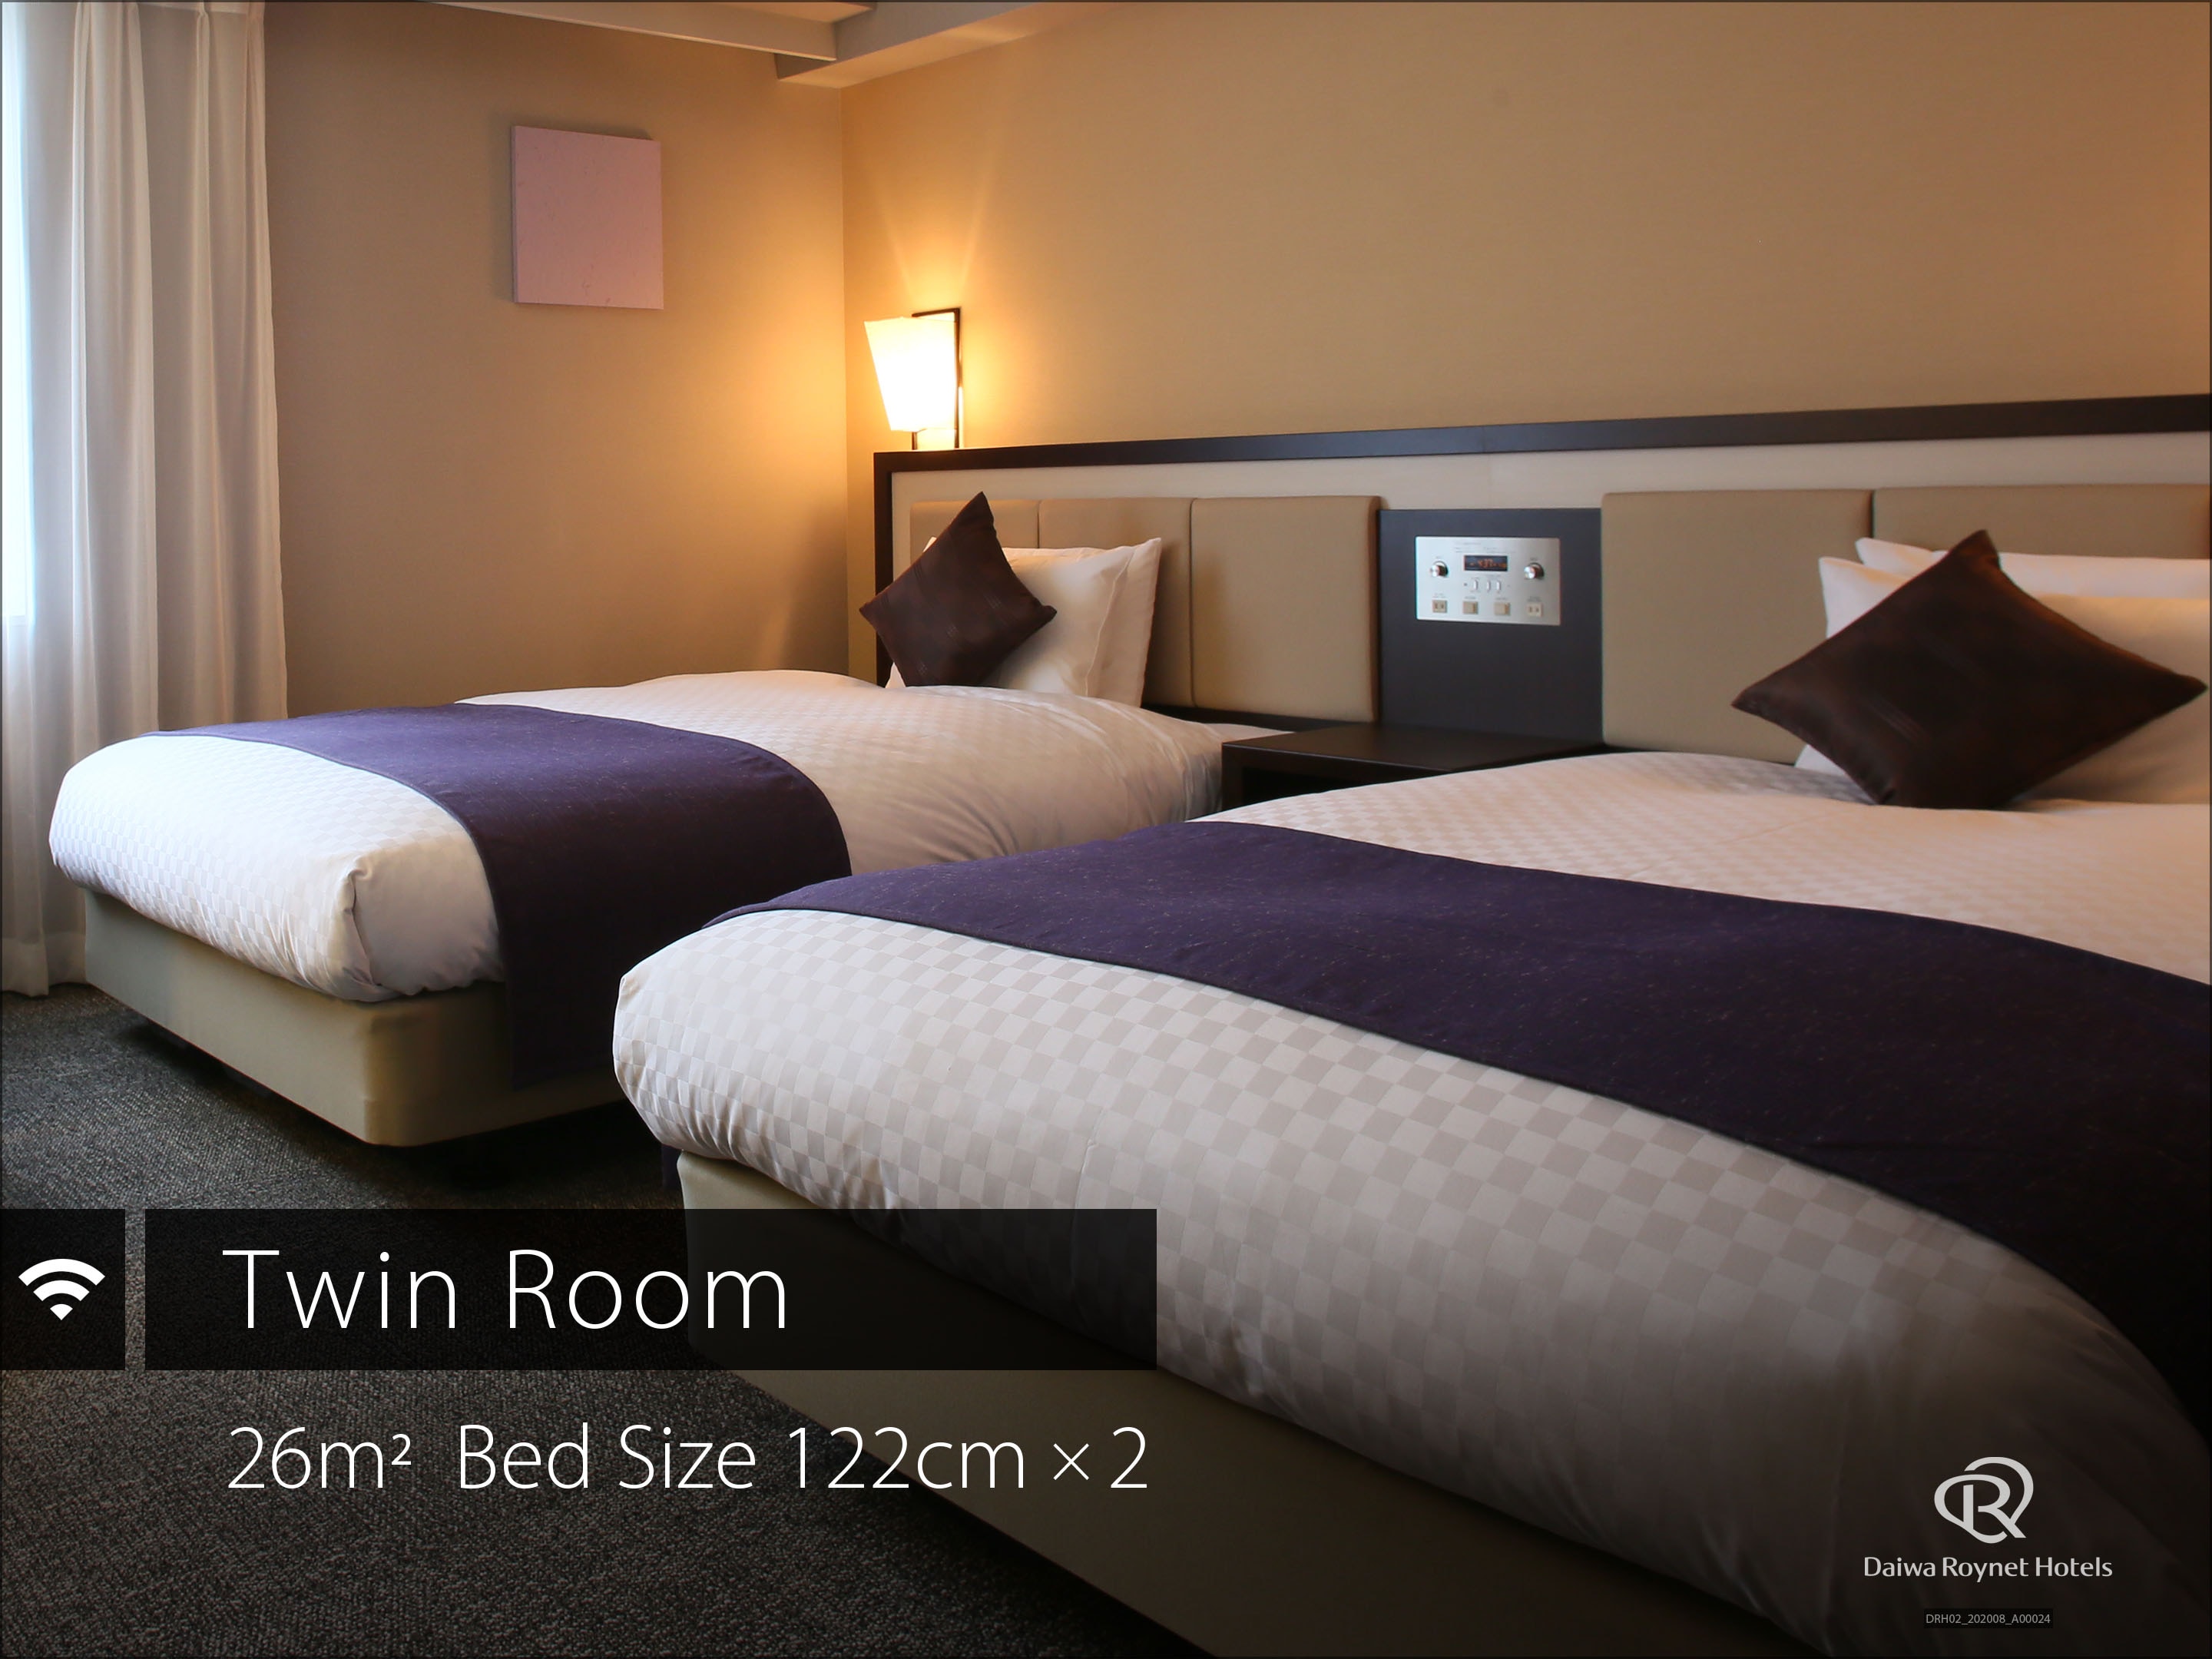 ★ Standard twin room